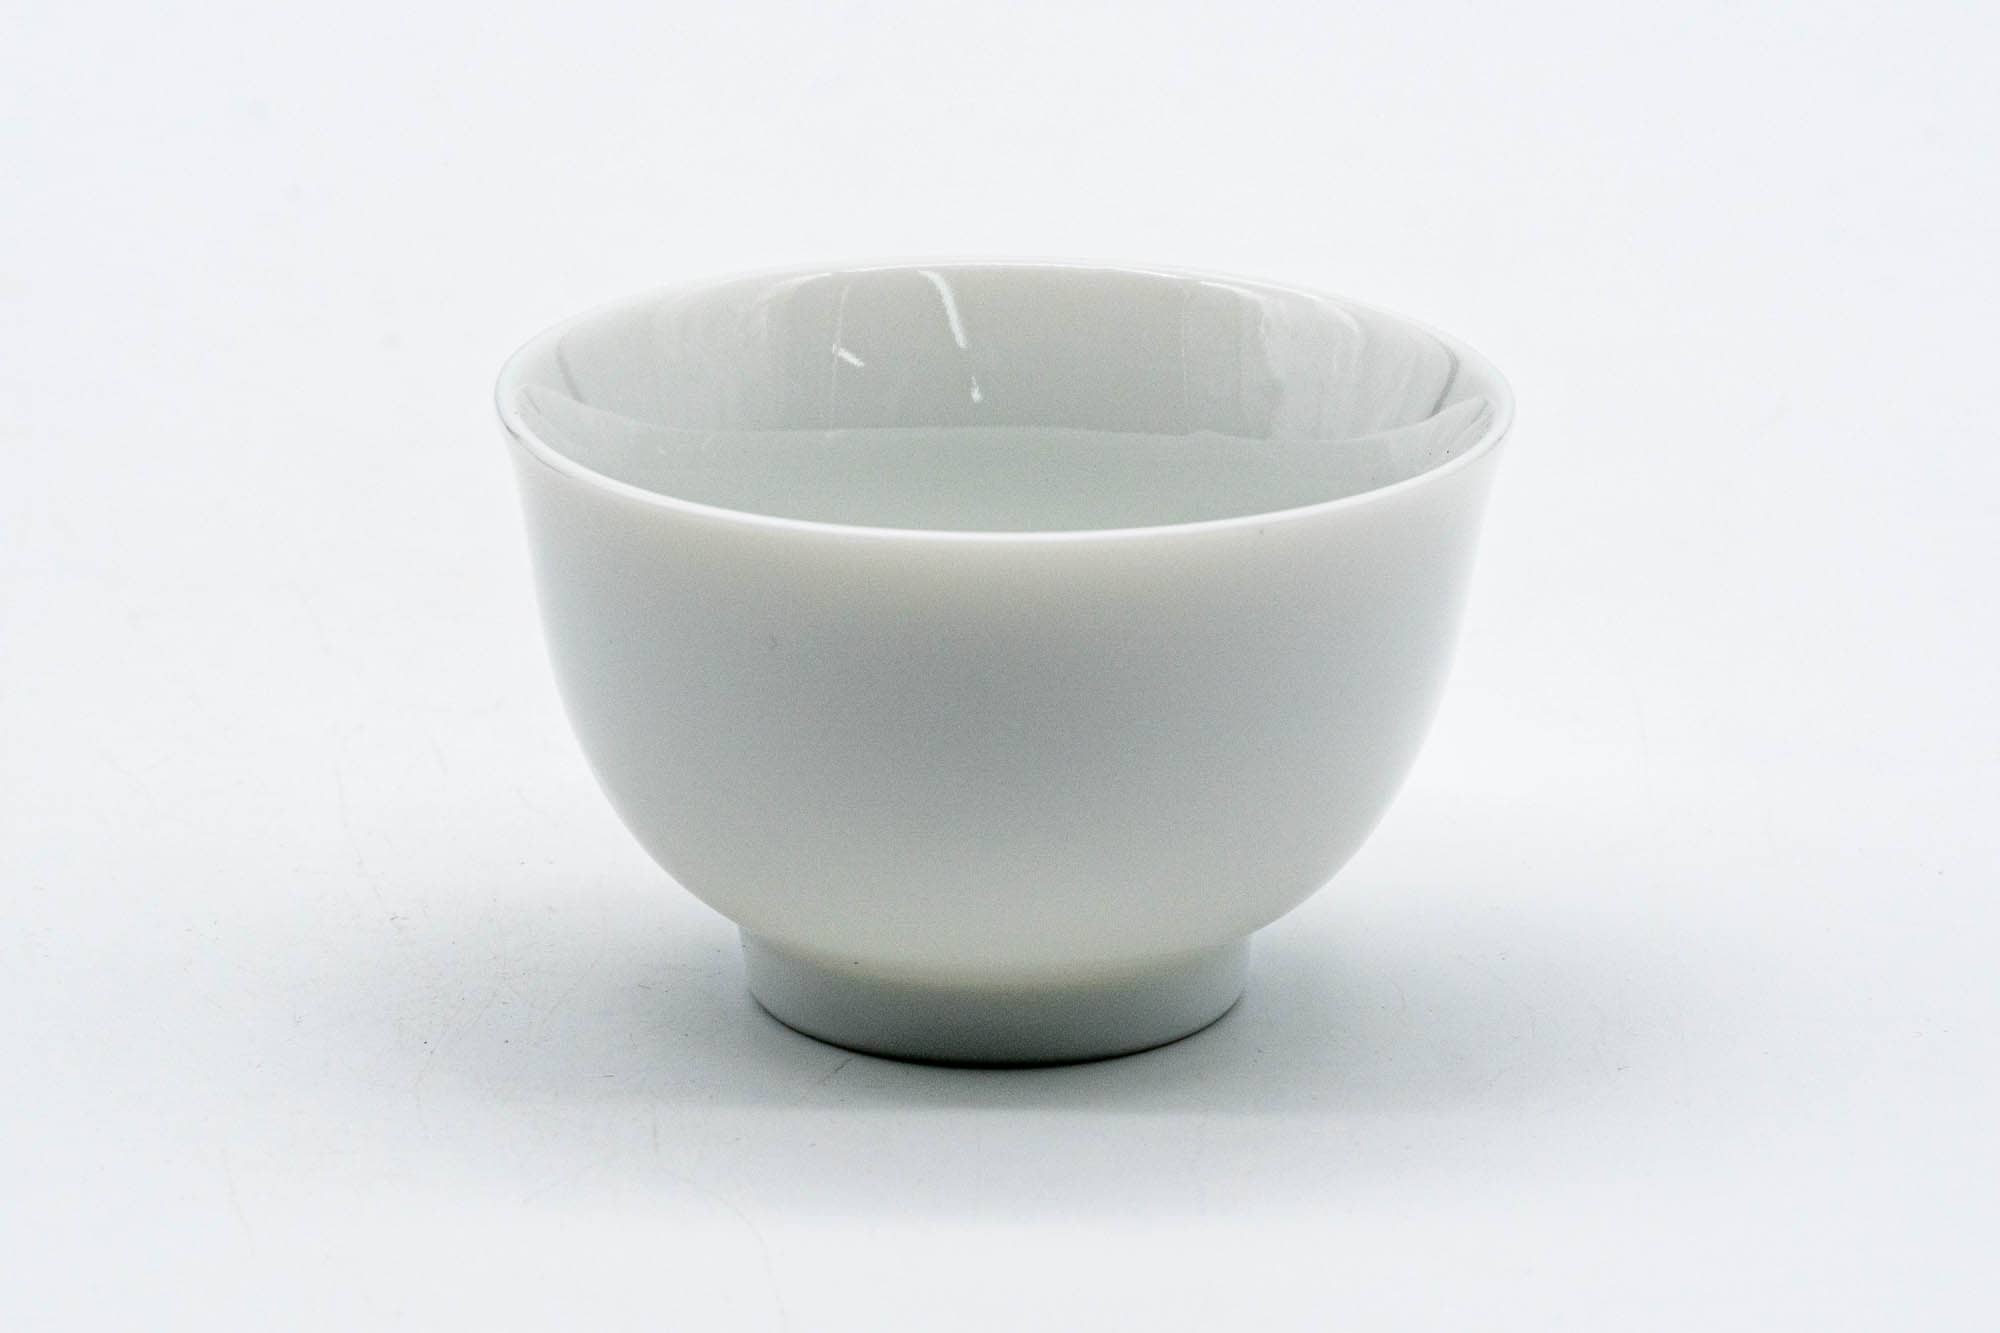 Japanese Tea Set - 昭萠窯 Shōhō Kiln - Black White Pearlescent Tokoname-yaki Teapot with 5 Porcelain Teacups